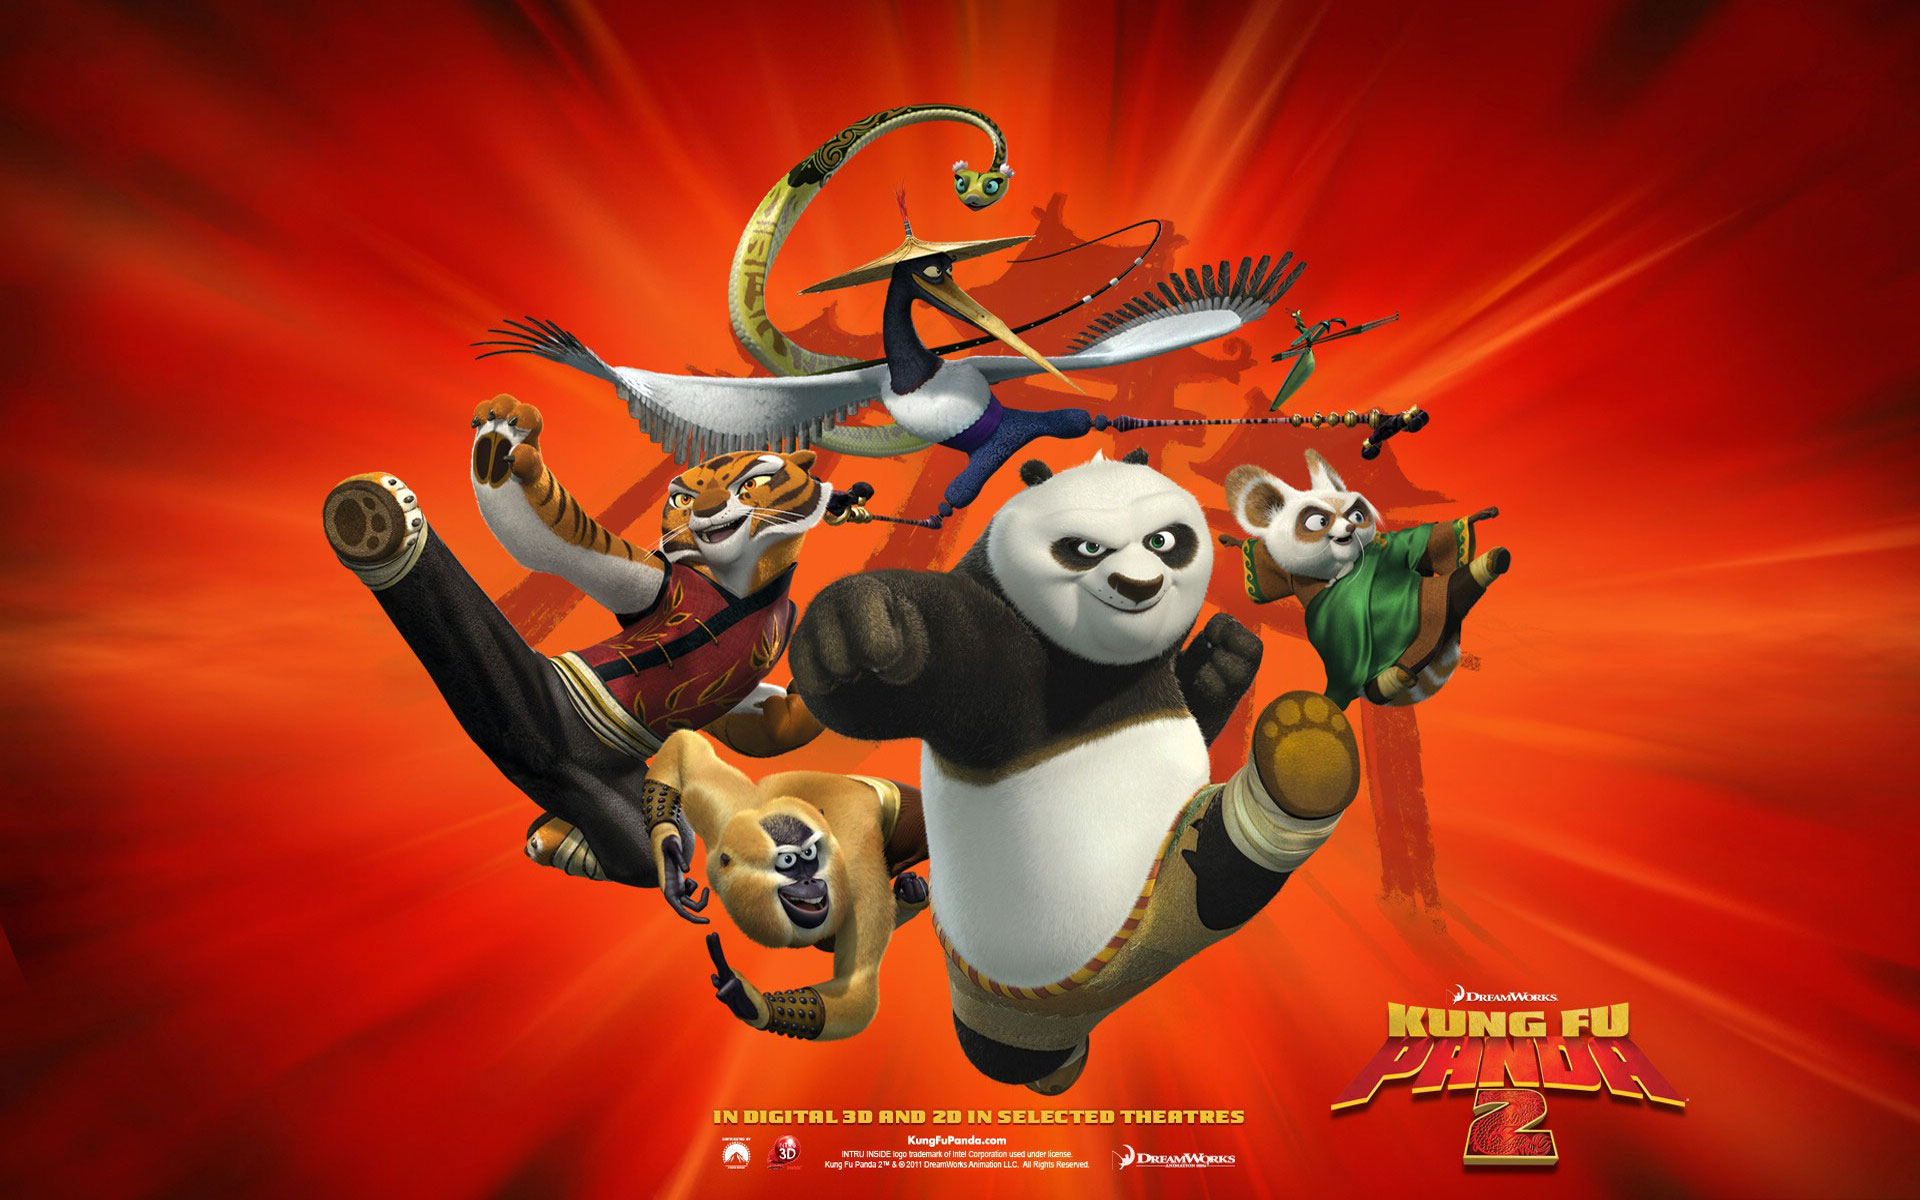 Gry puzzle Kung Fu Panda wymiata